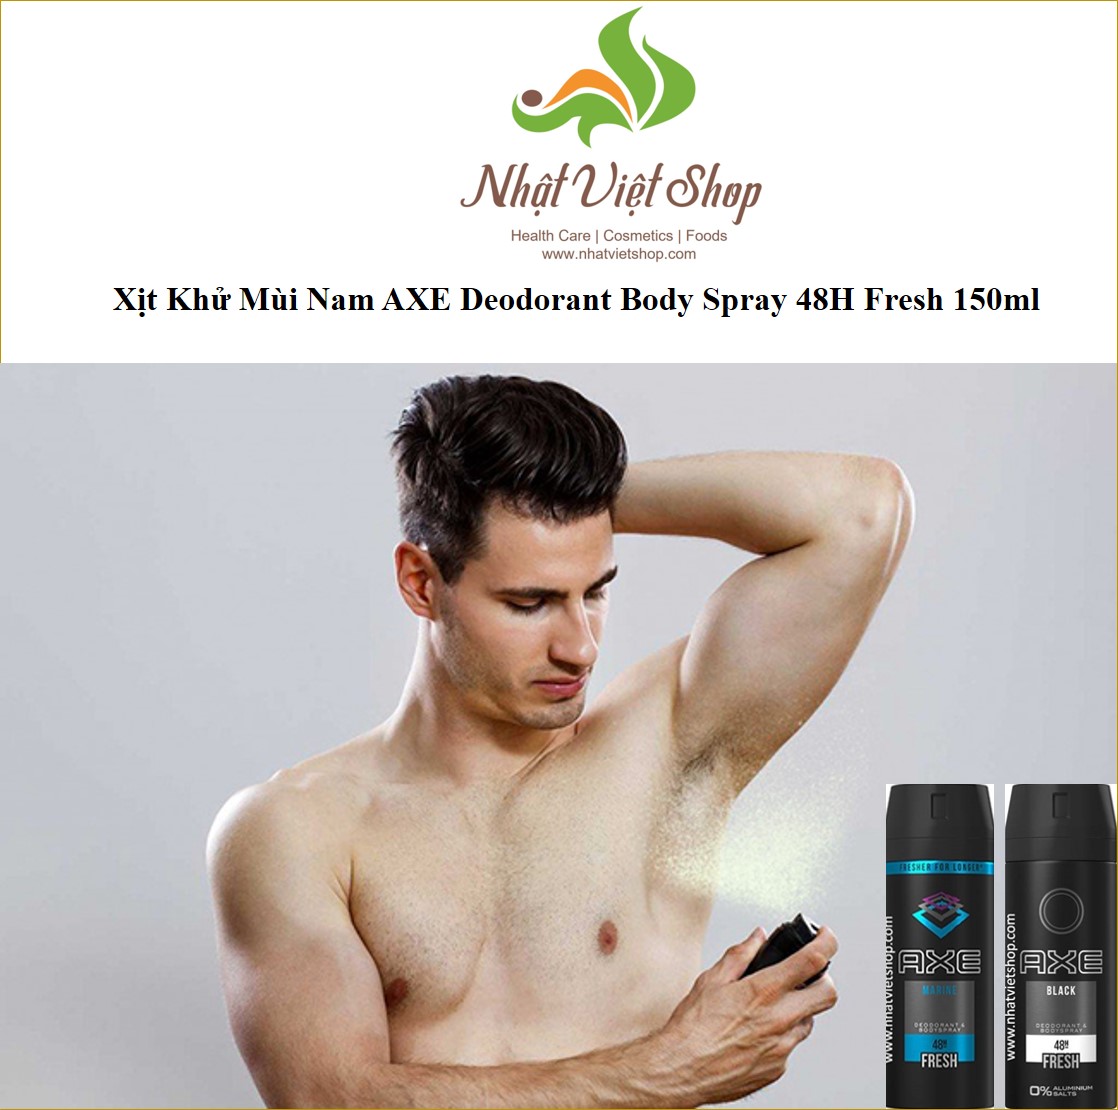 Xịt Khử Mùi Nam AXE Deodorant Body Spray 48H Fresh 150ml